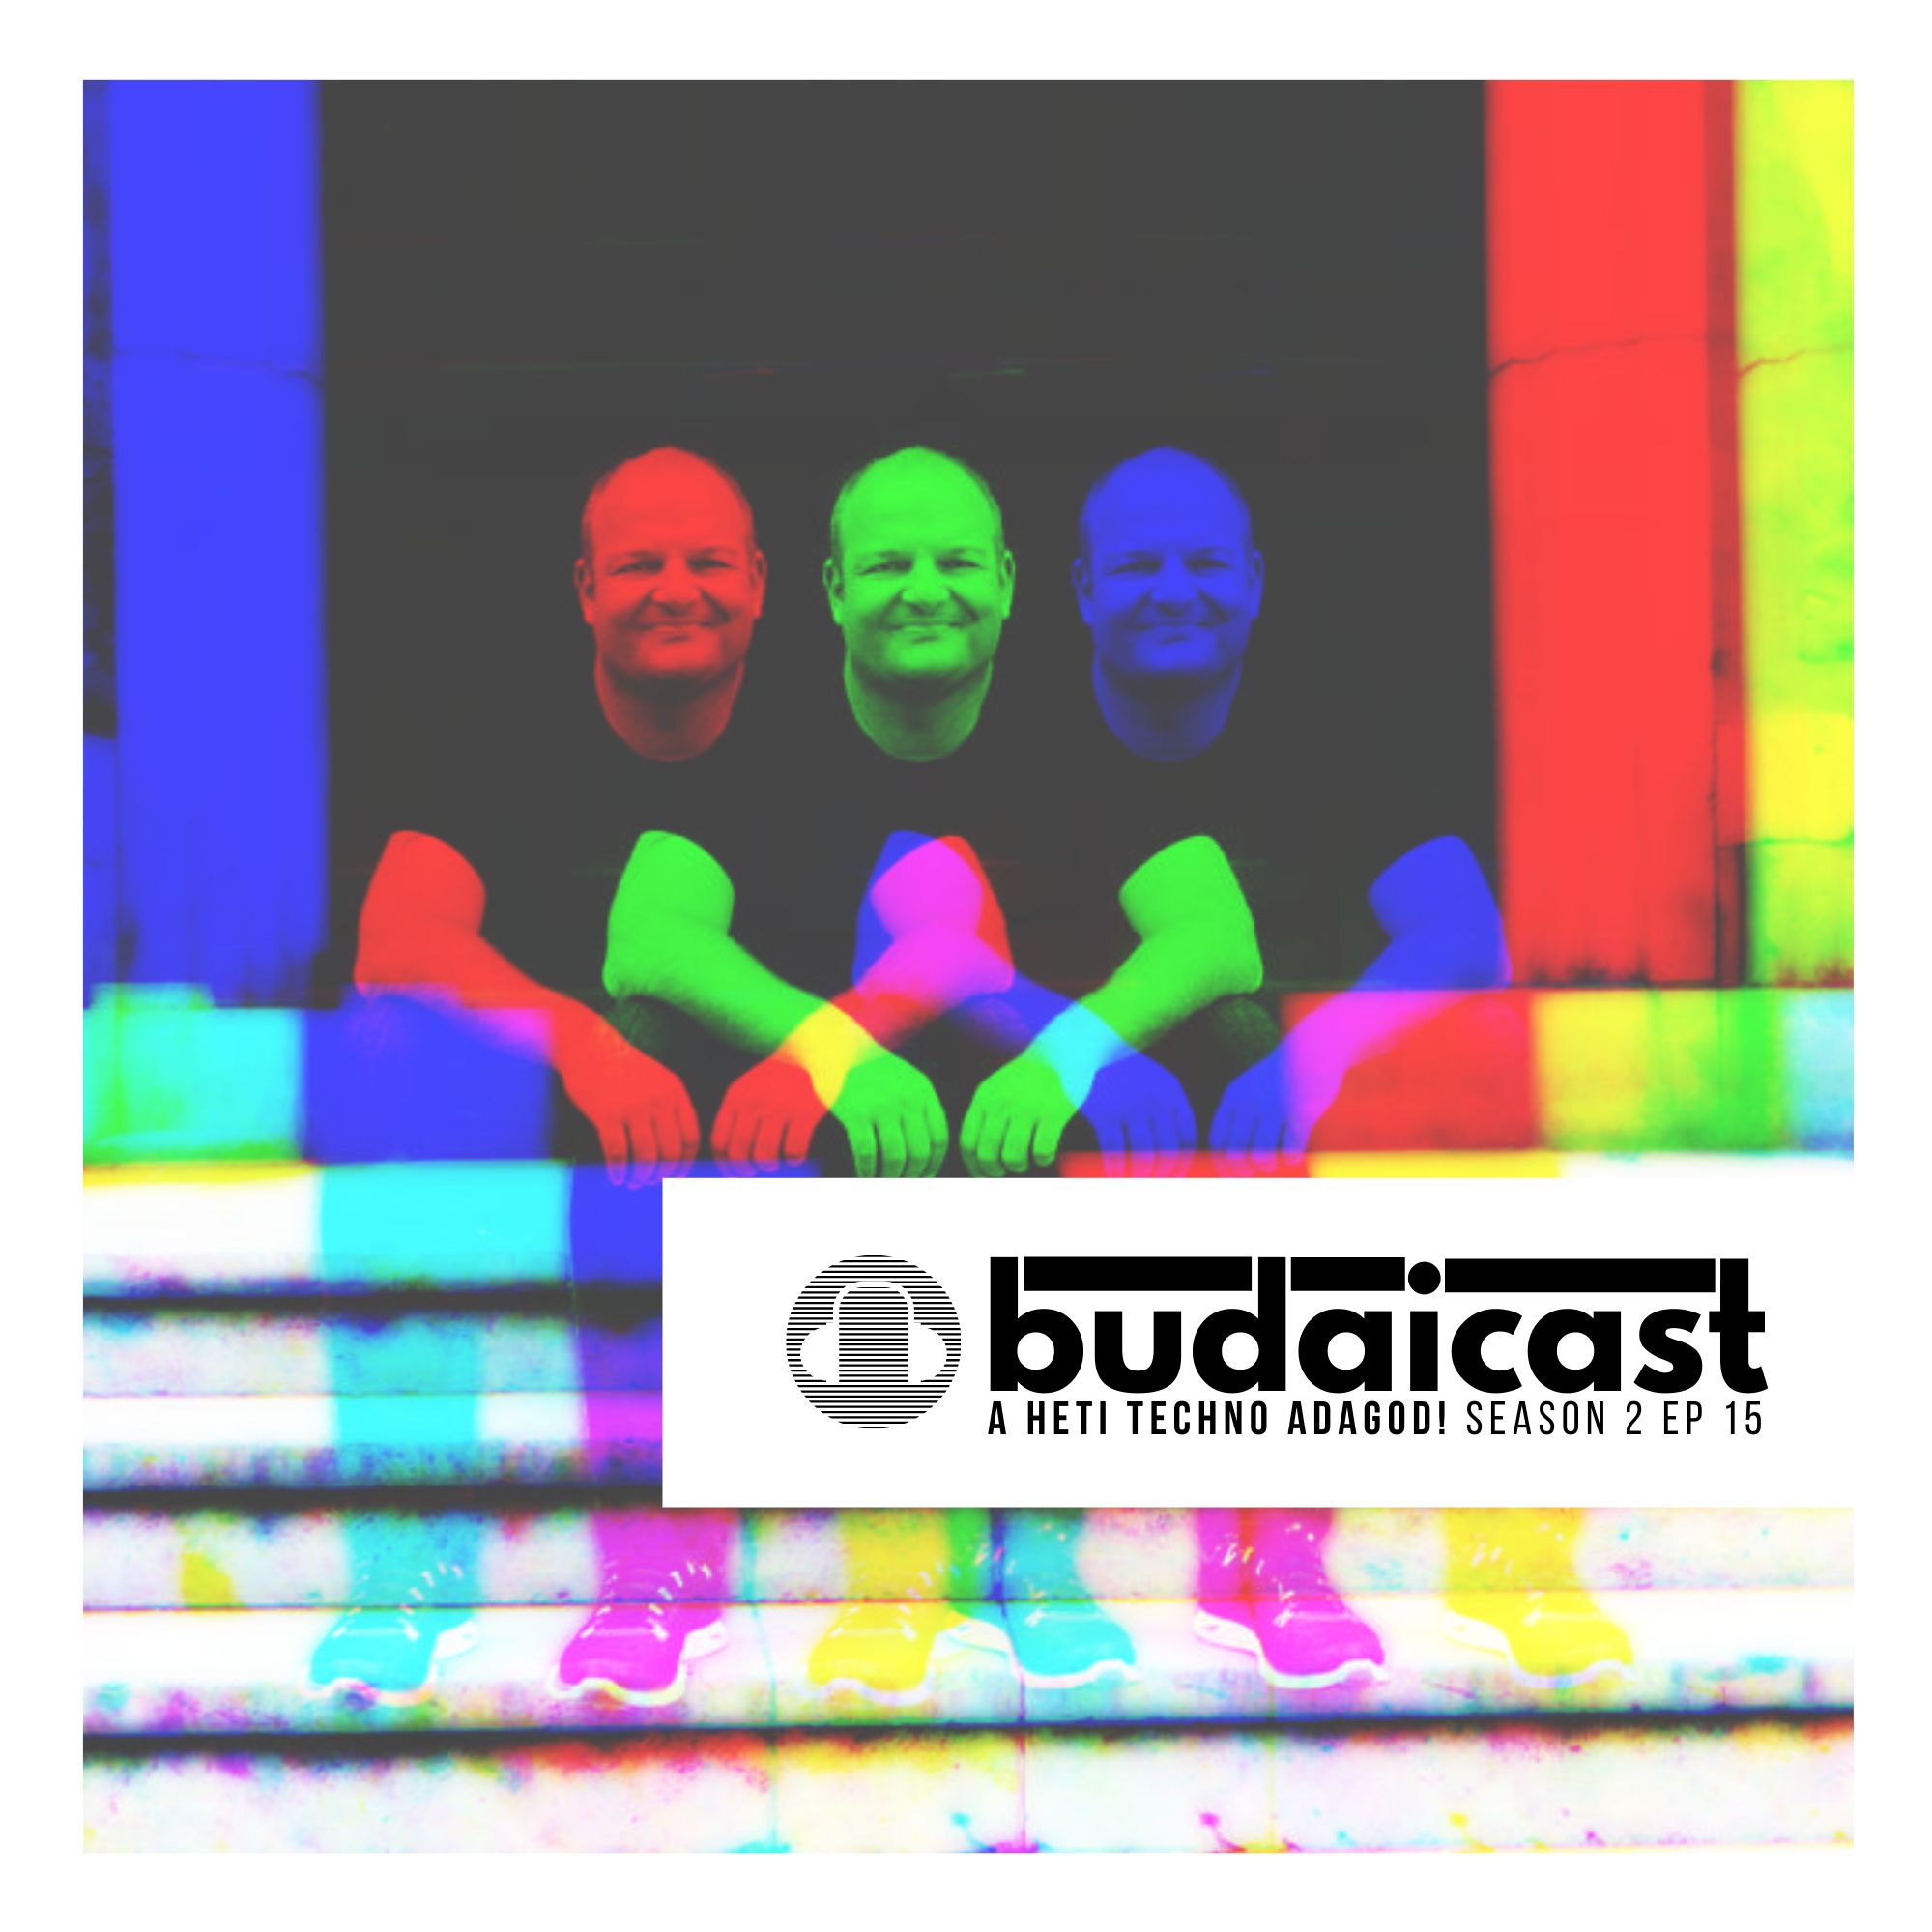 DJ Budai - Budaicast 2ep 15